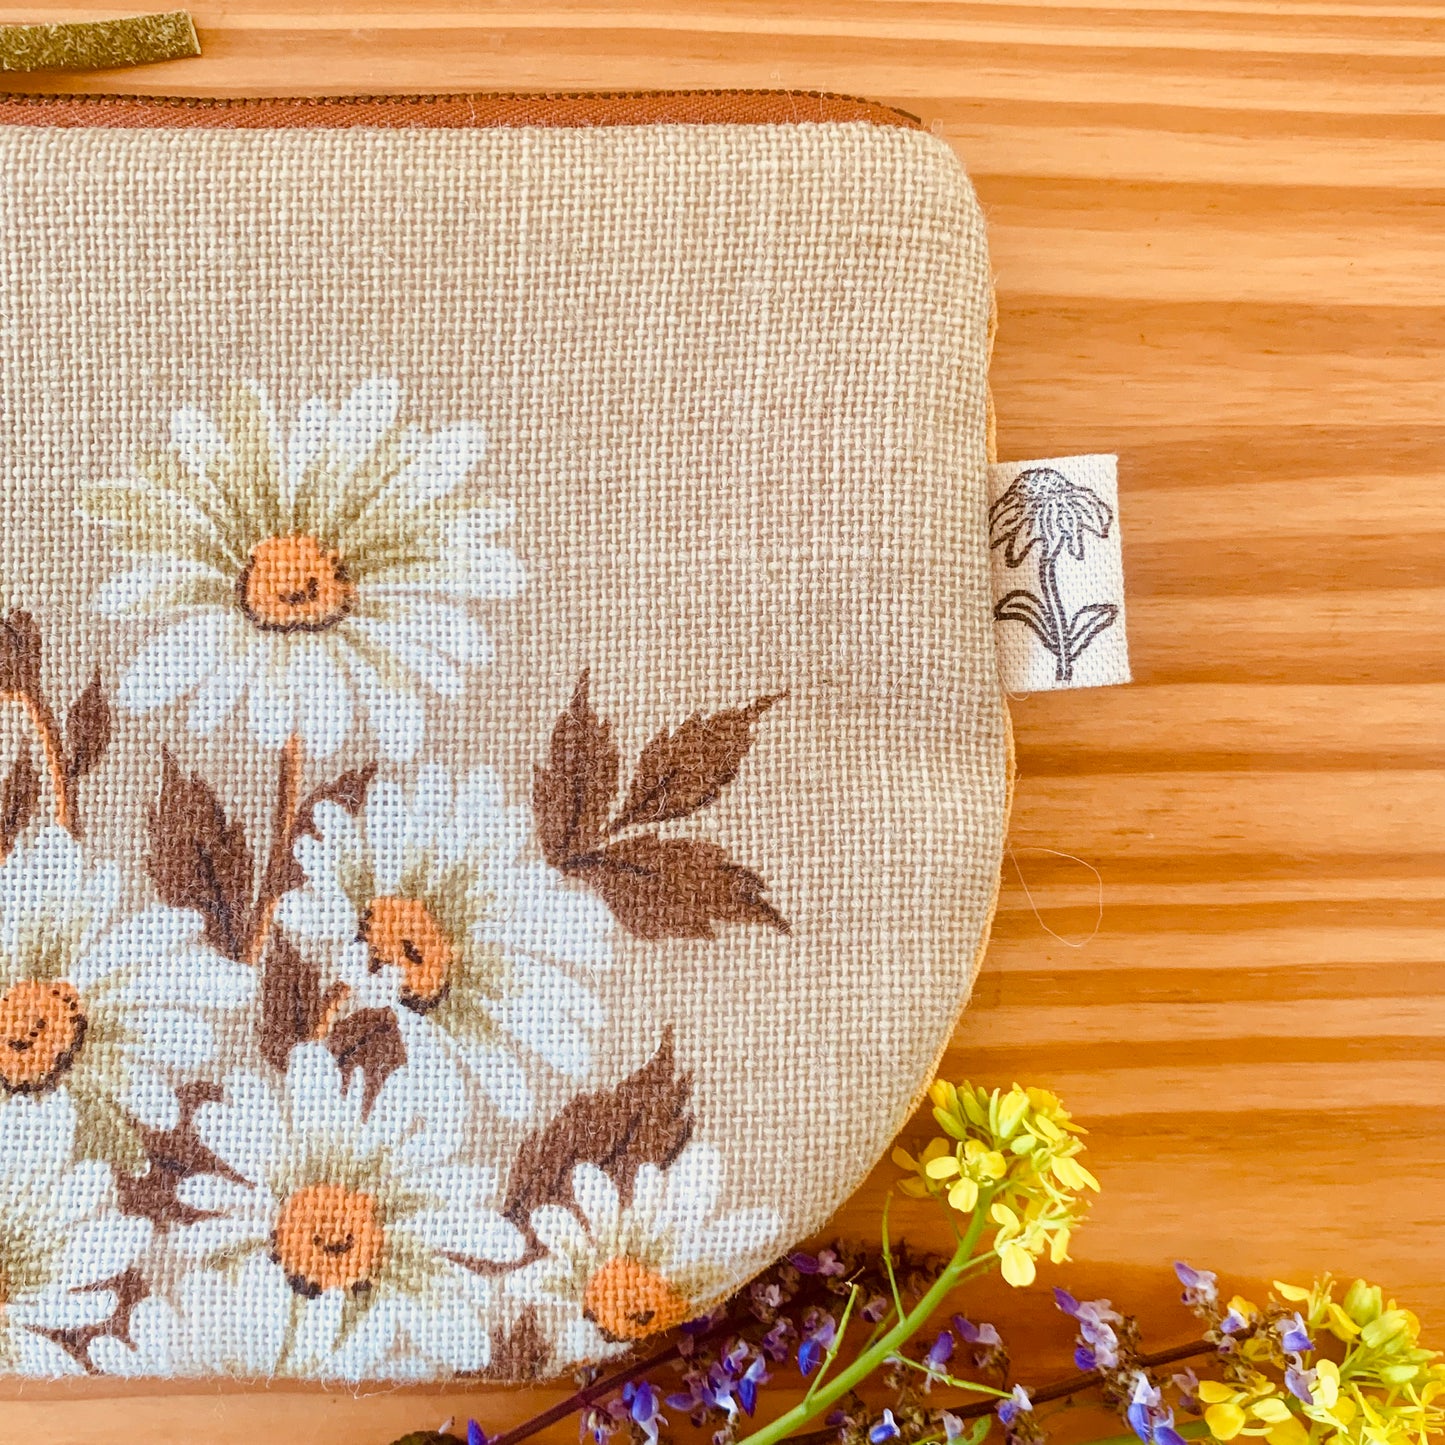 Vintage daisy clutch purse